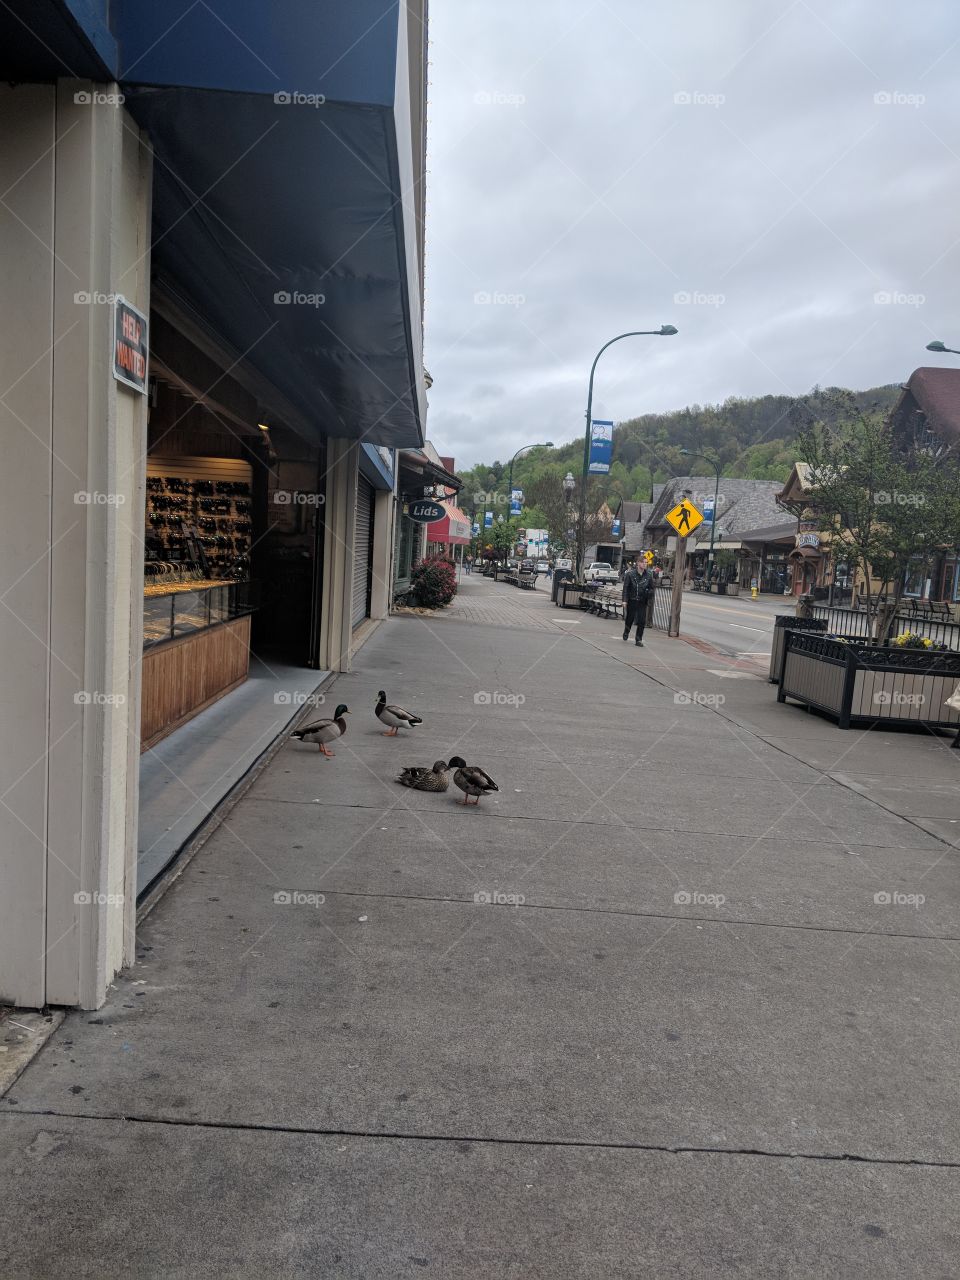 Duck town